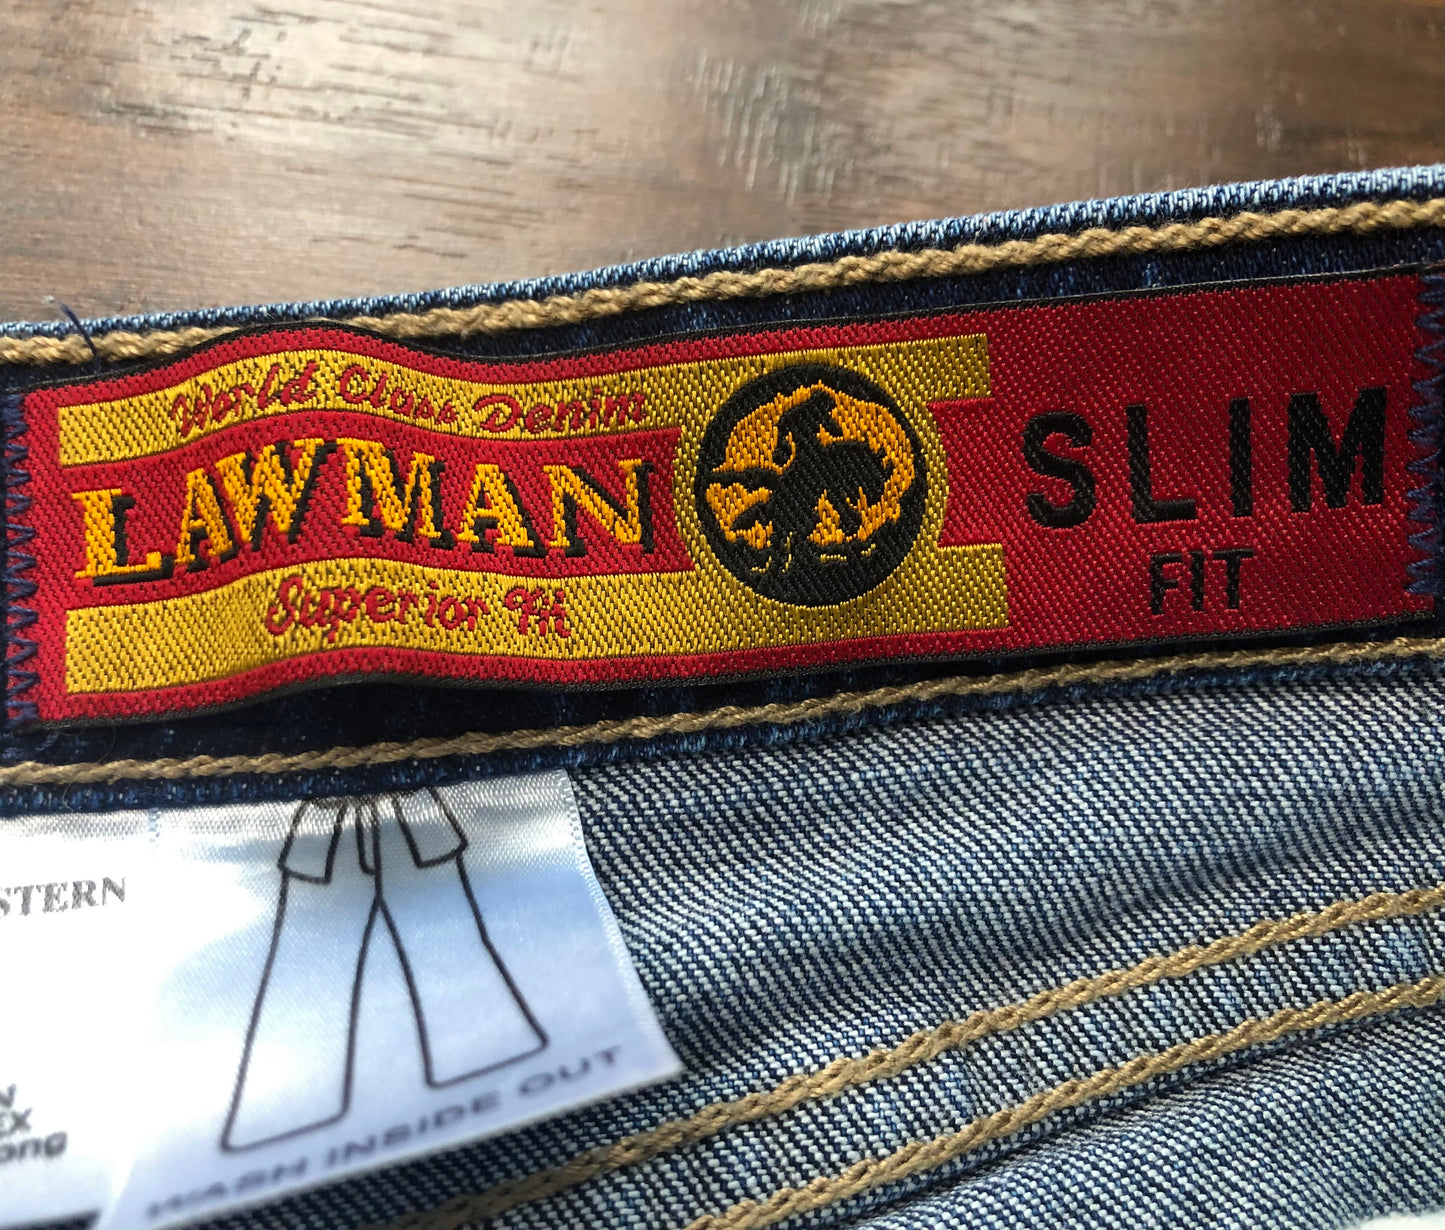 Vintage Western Women’s Lawman Jeans with Rhinestones | Superior/Slim Fit